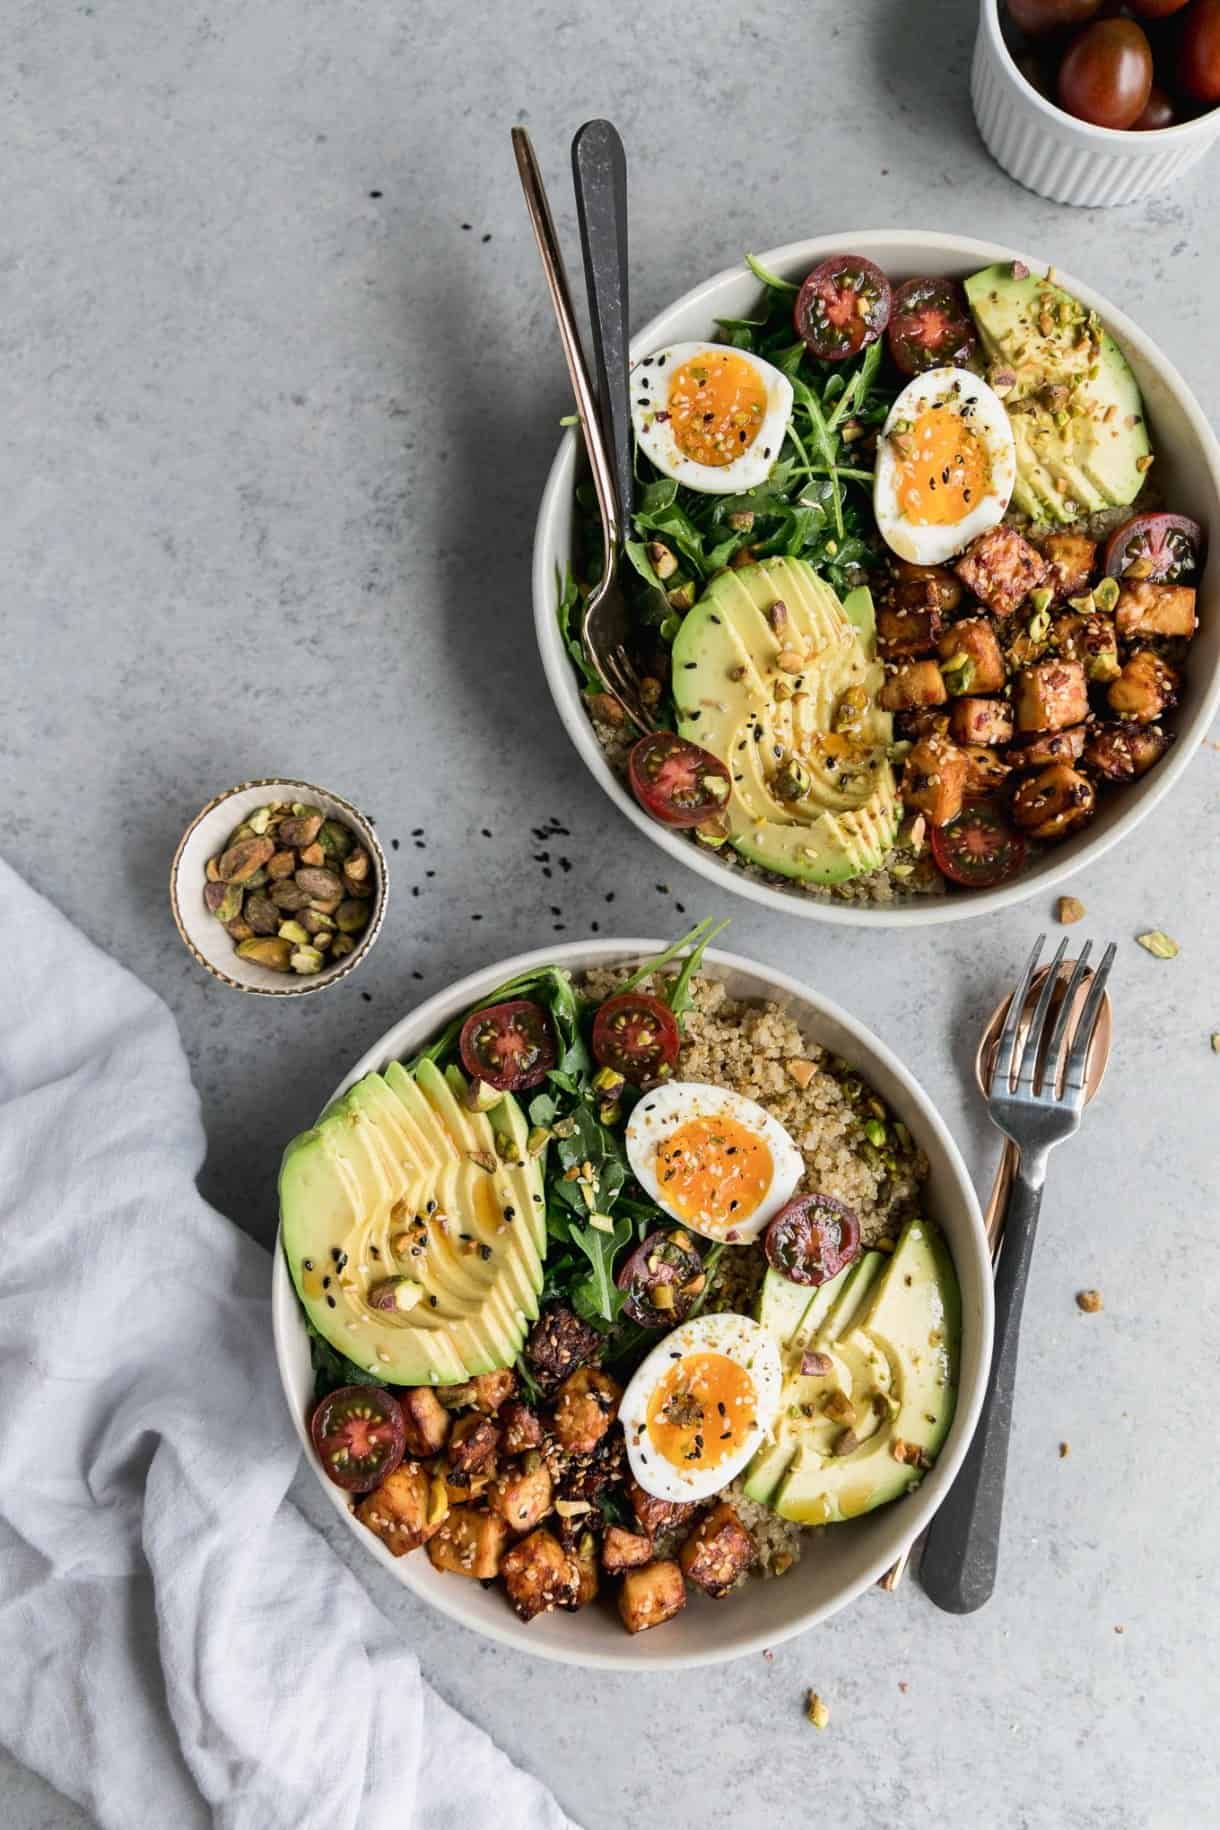 A quinoa bowl with eggs, tofu and avoacdo